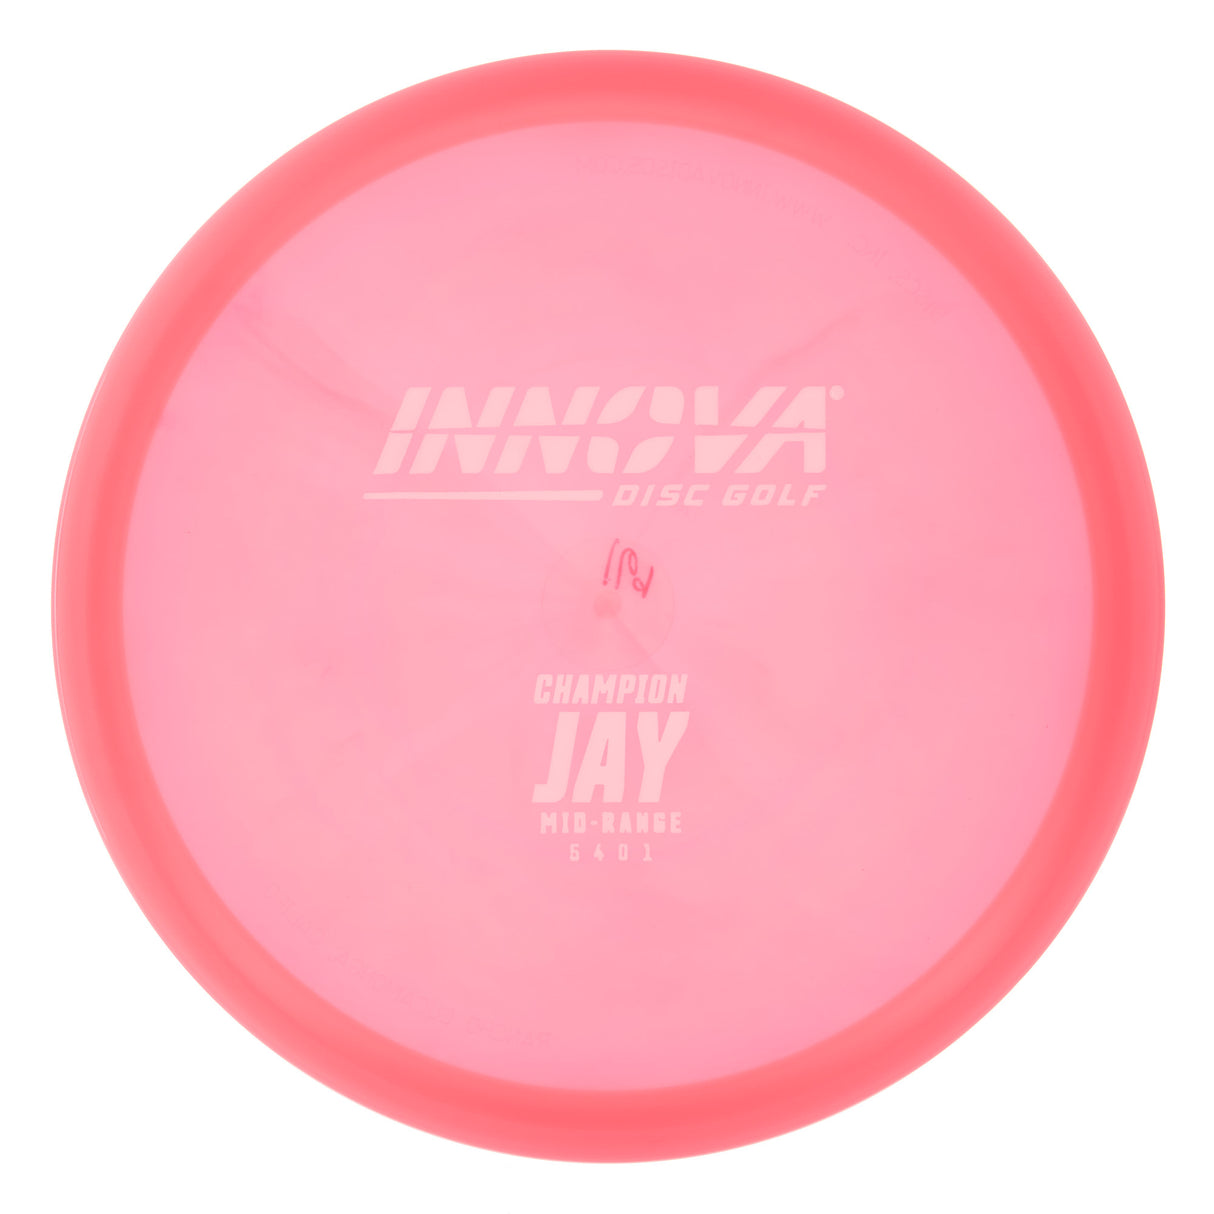 Innova Jay - Champion 170g | Style 0001